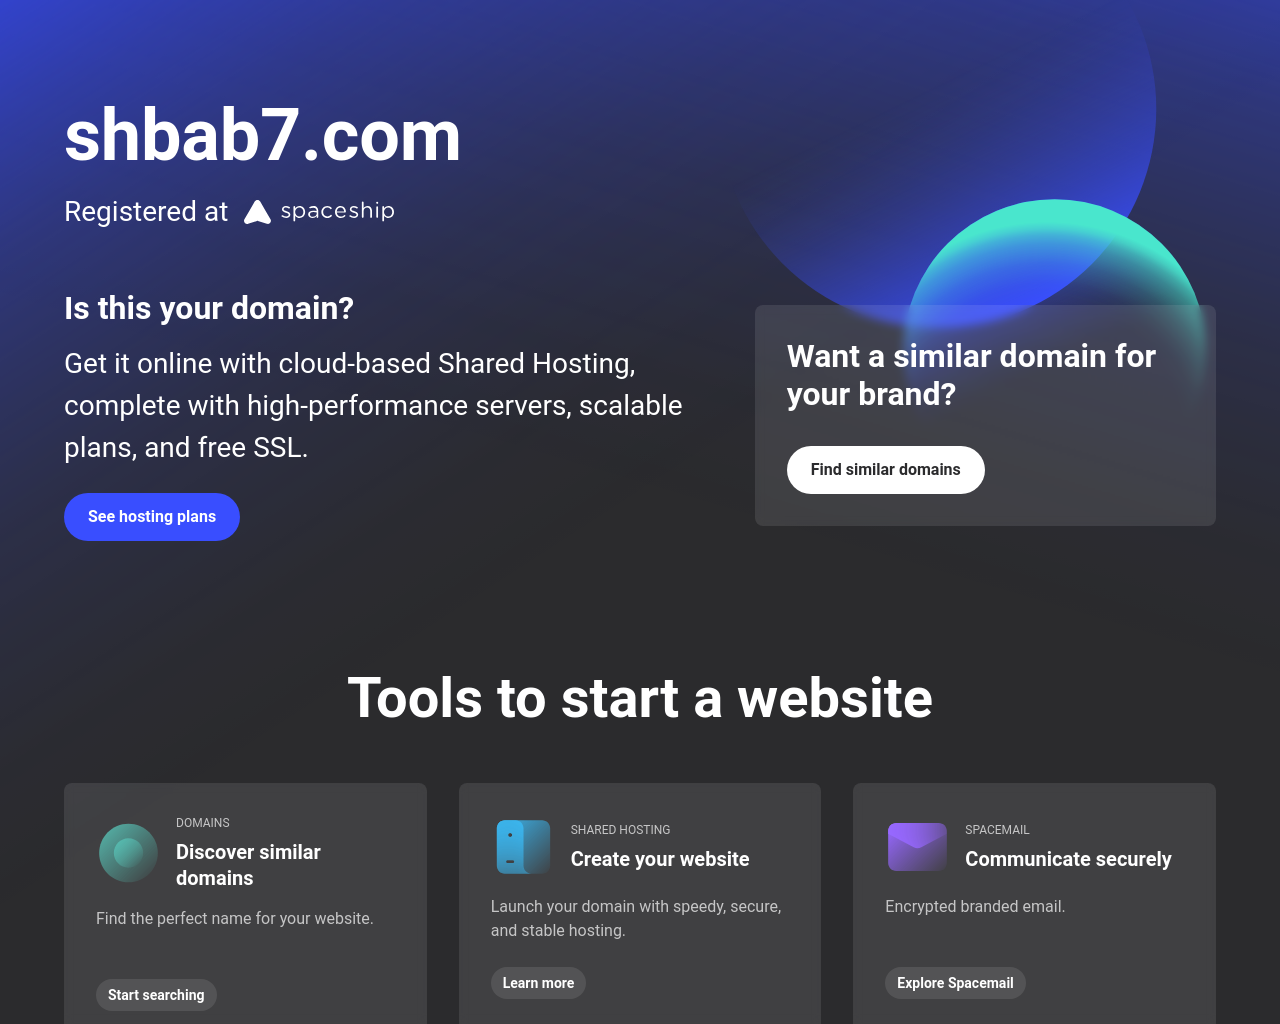 shbab7.com